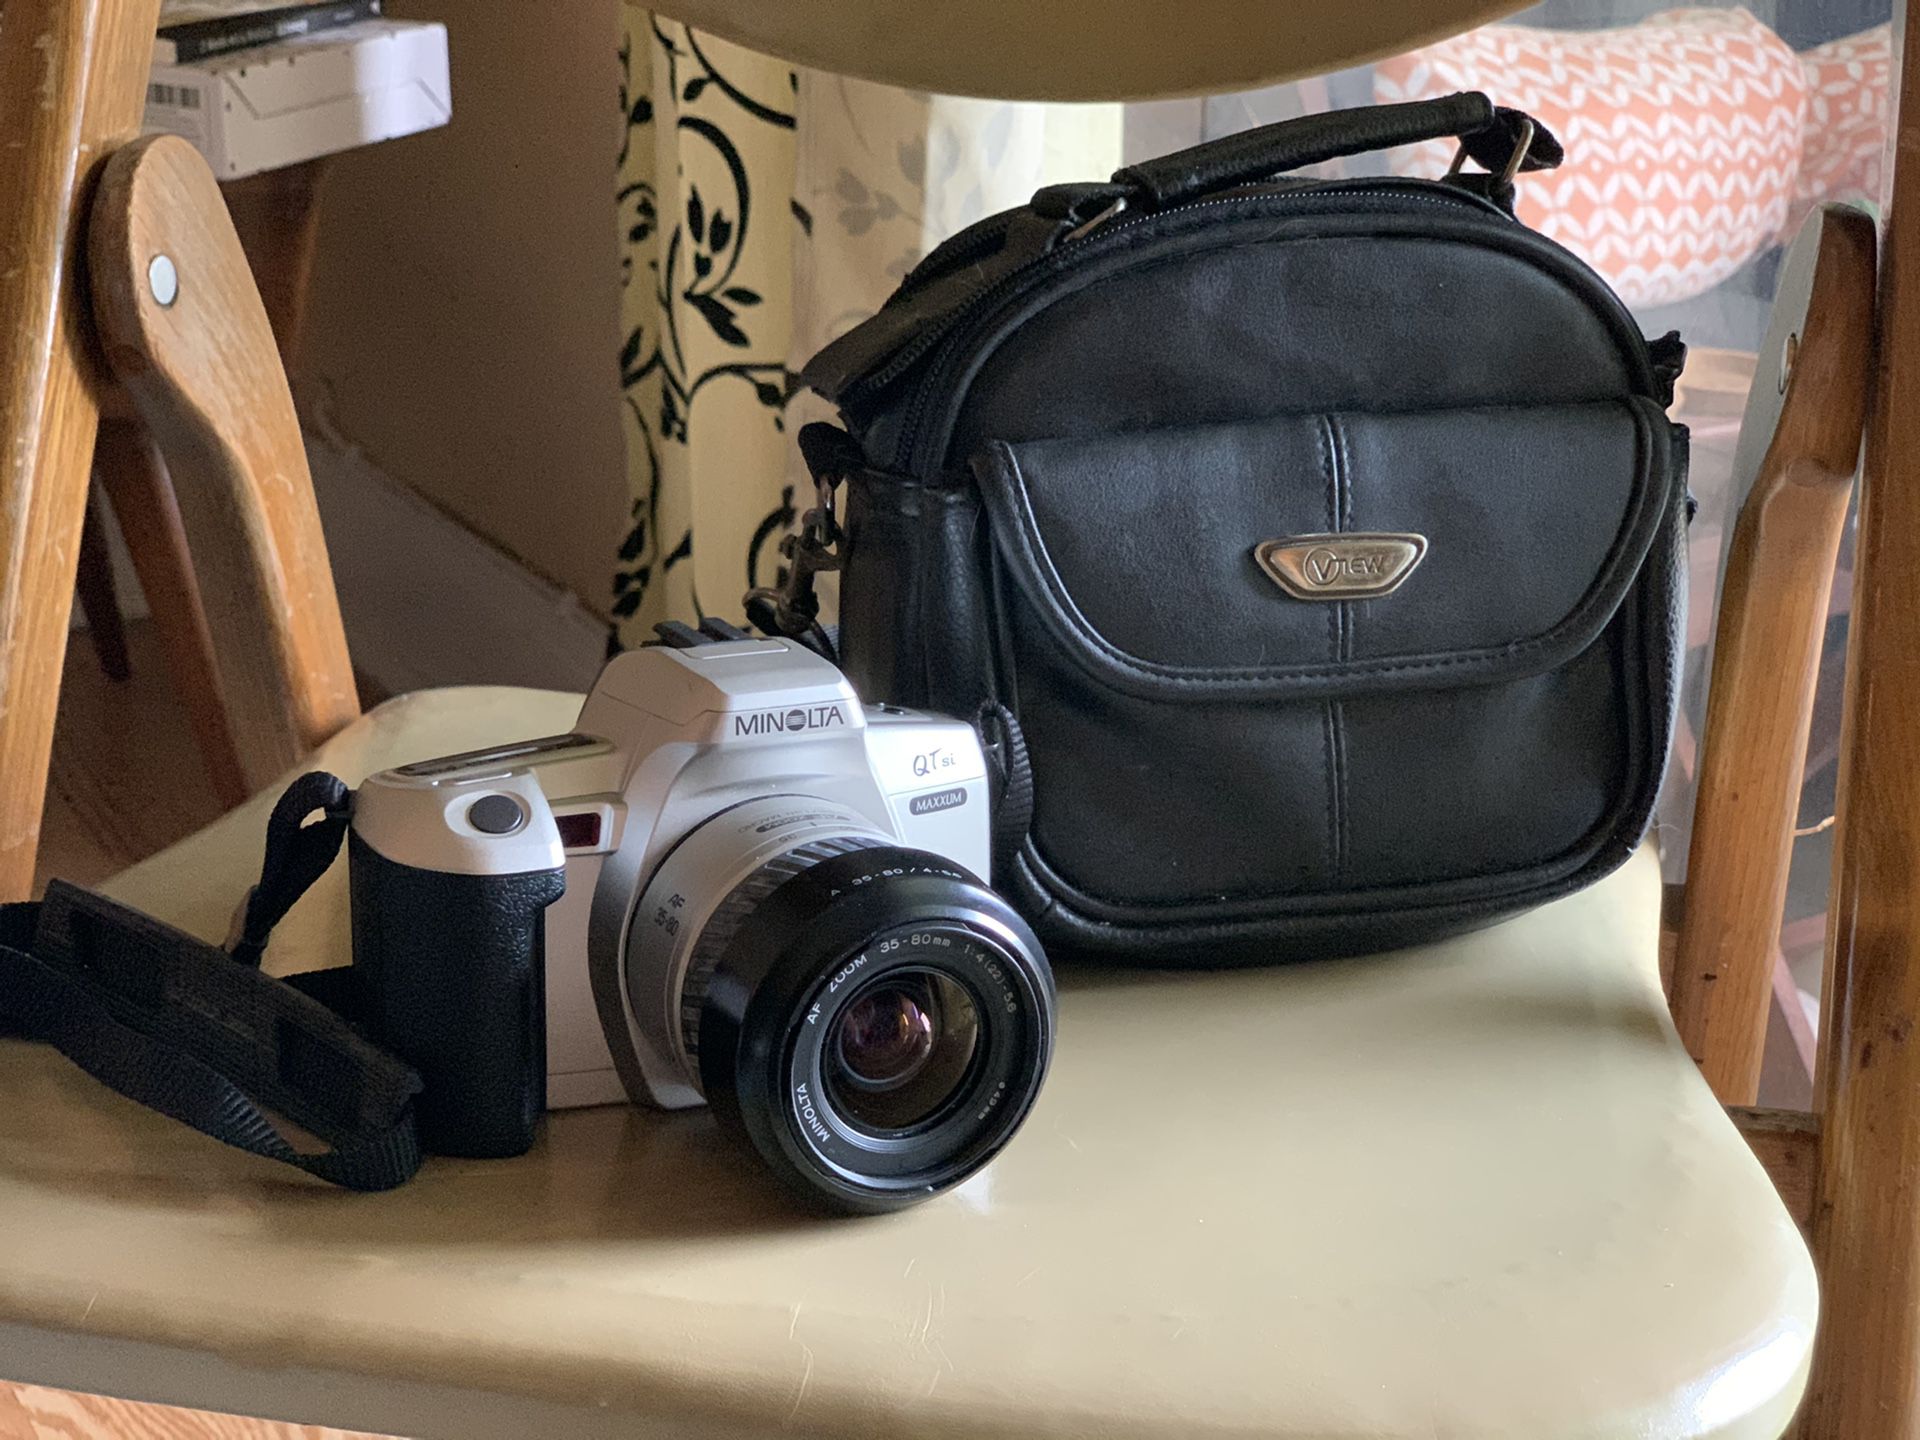 Minolta Maxxum QTsi 35mm SLR Camera Kit w/ 35-80mm Lens and camera bag with bonus Canon Sure Shot 85 Film Camera